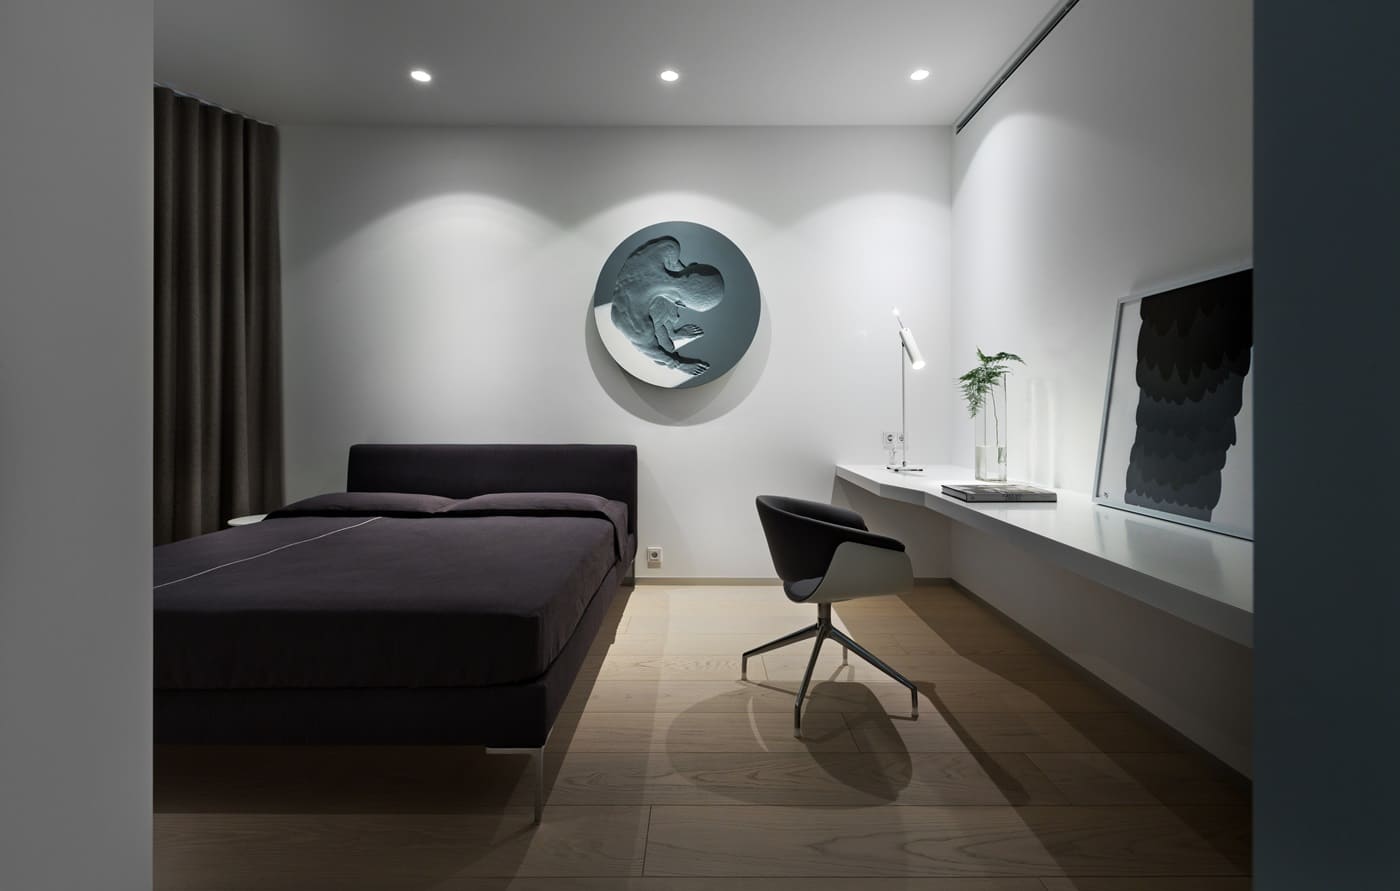 minimalism style bedroom decor